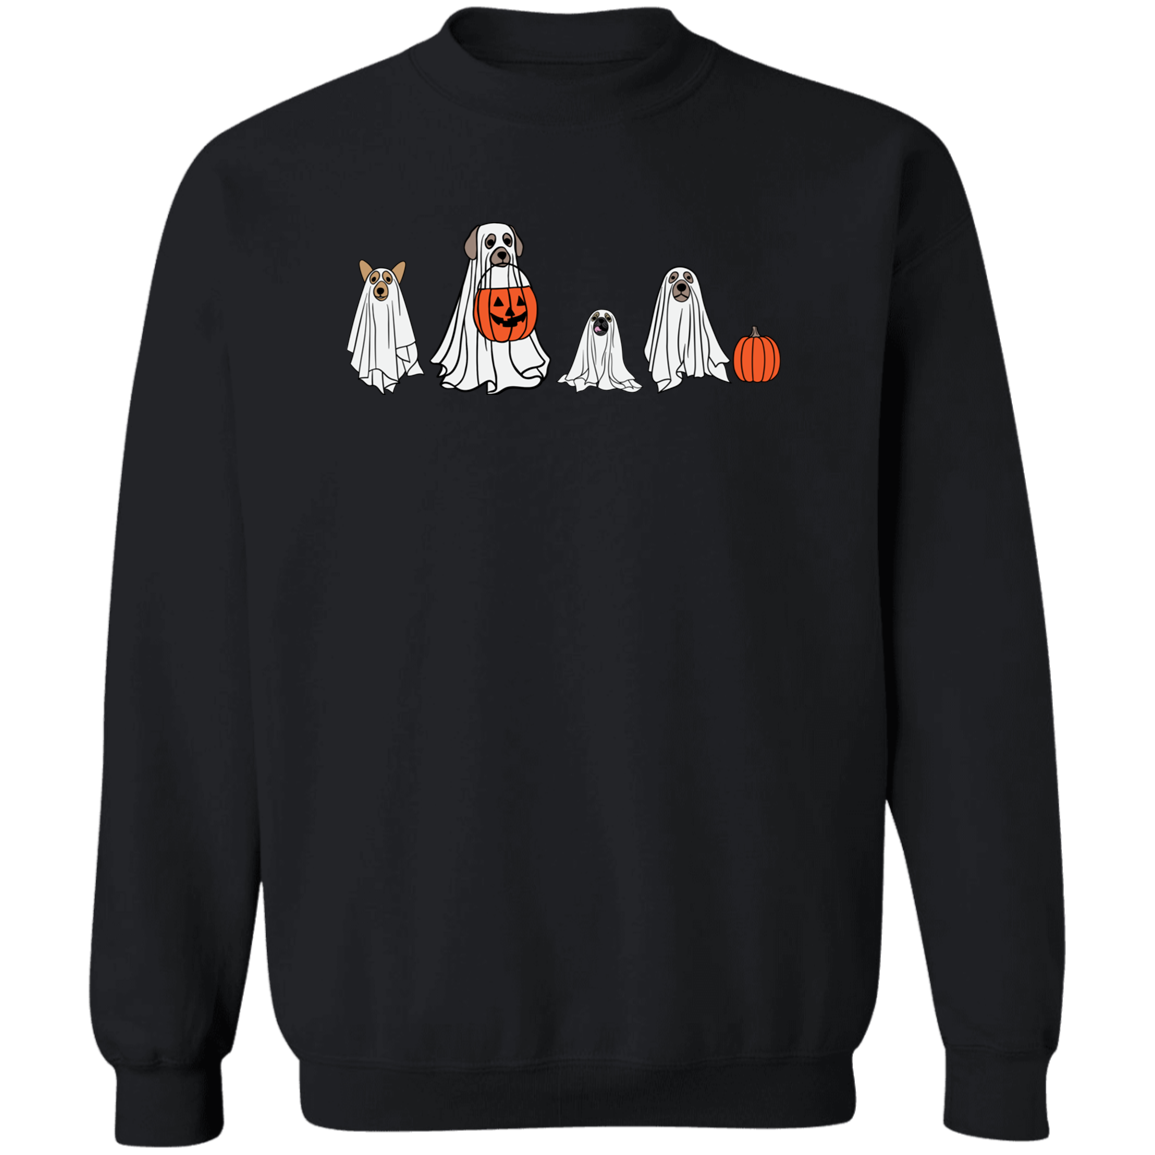 Halloween Ghost Dogs Crewneck Sweatshirt